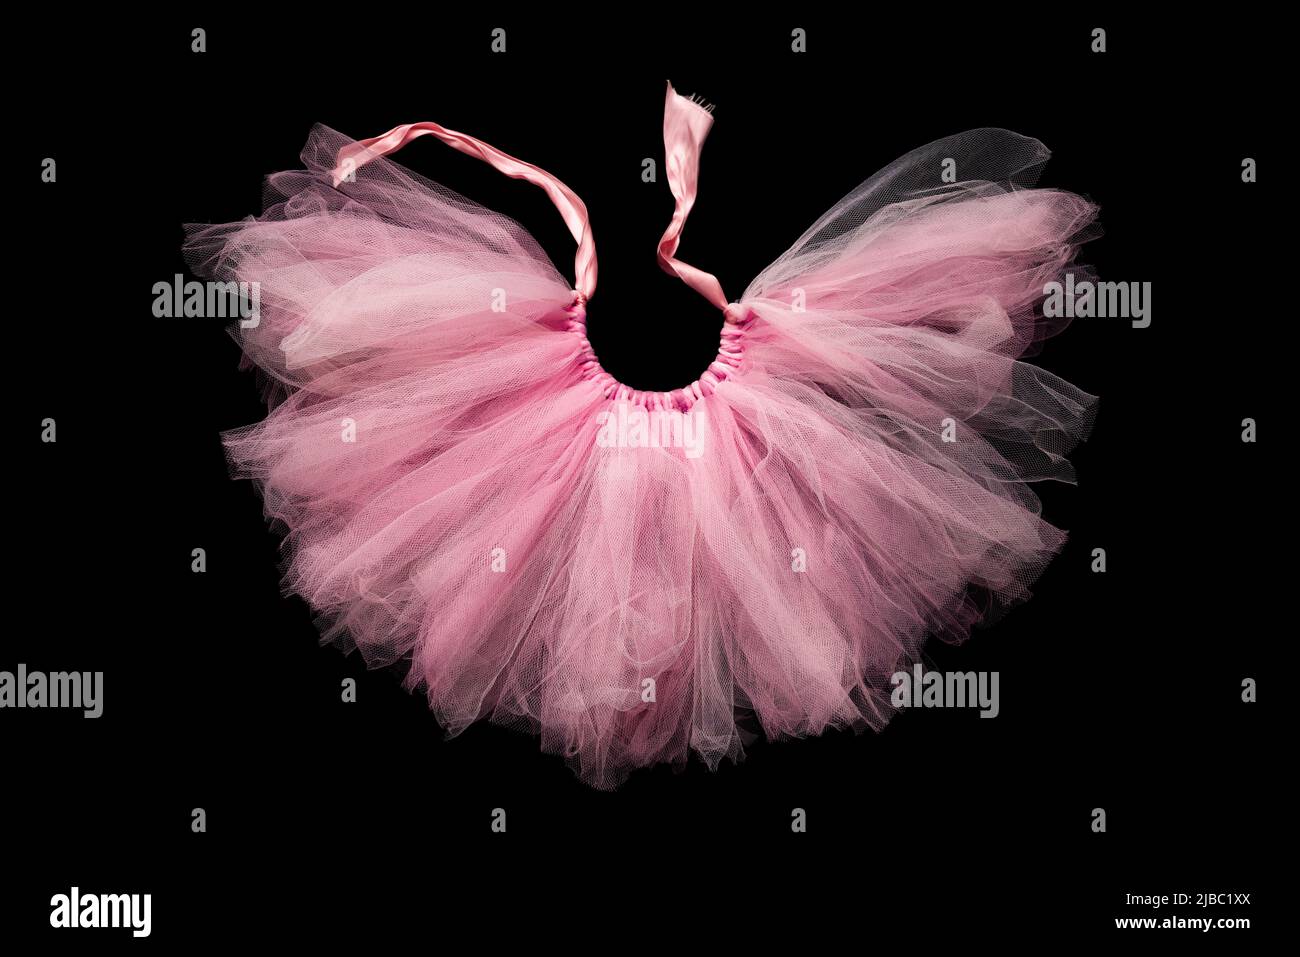 Girly tule tutu skirt with pink satin ribbon Stock Photo